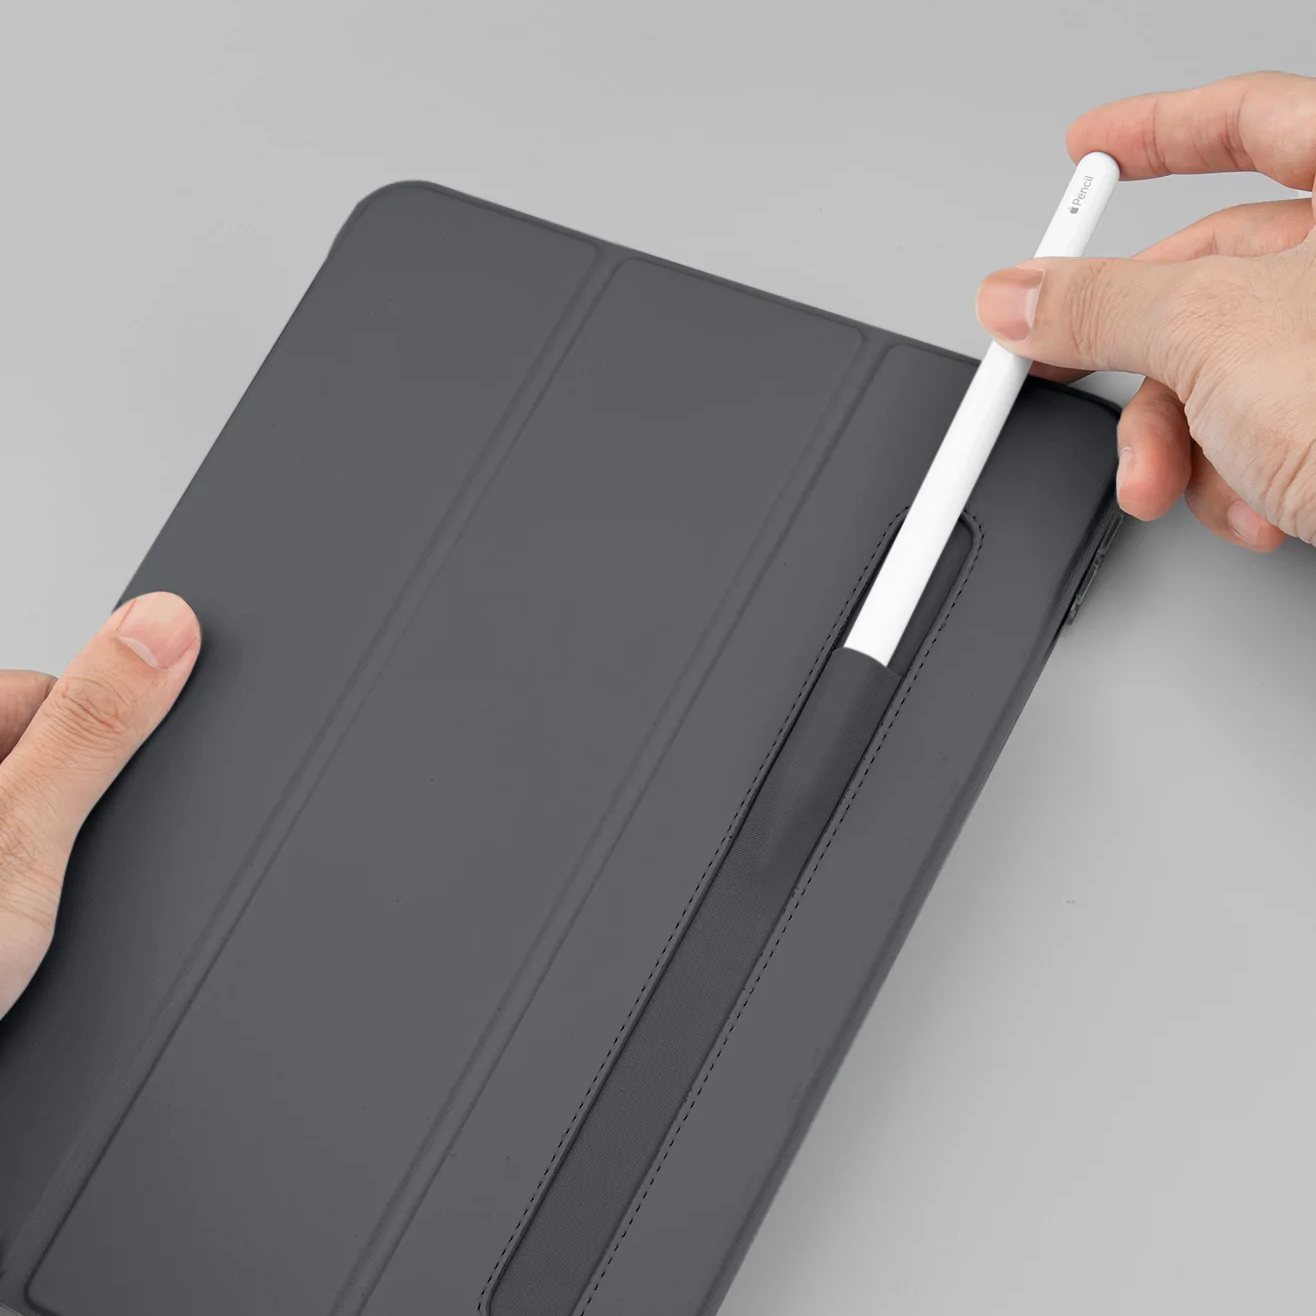 LAUT HUEX Folio 透亮 2020 iPad Pro 12.9吋 4代 含筆槽平板保護套, 灰